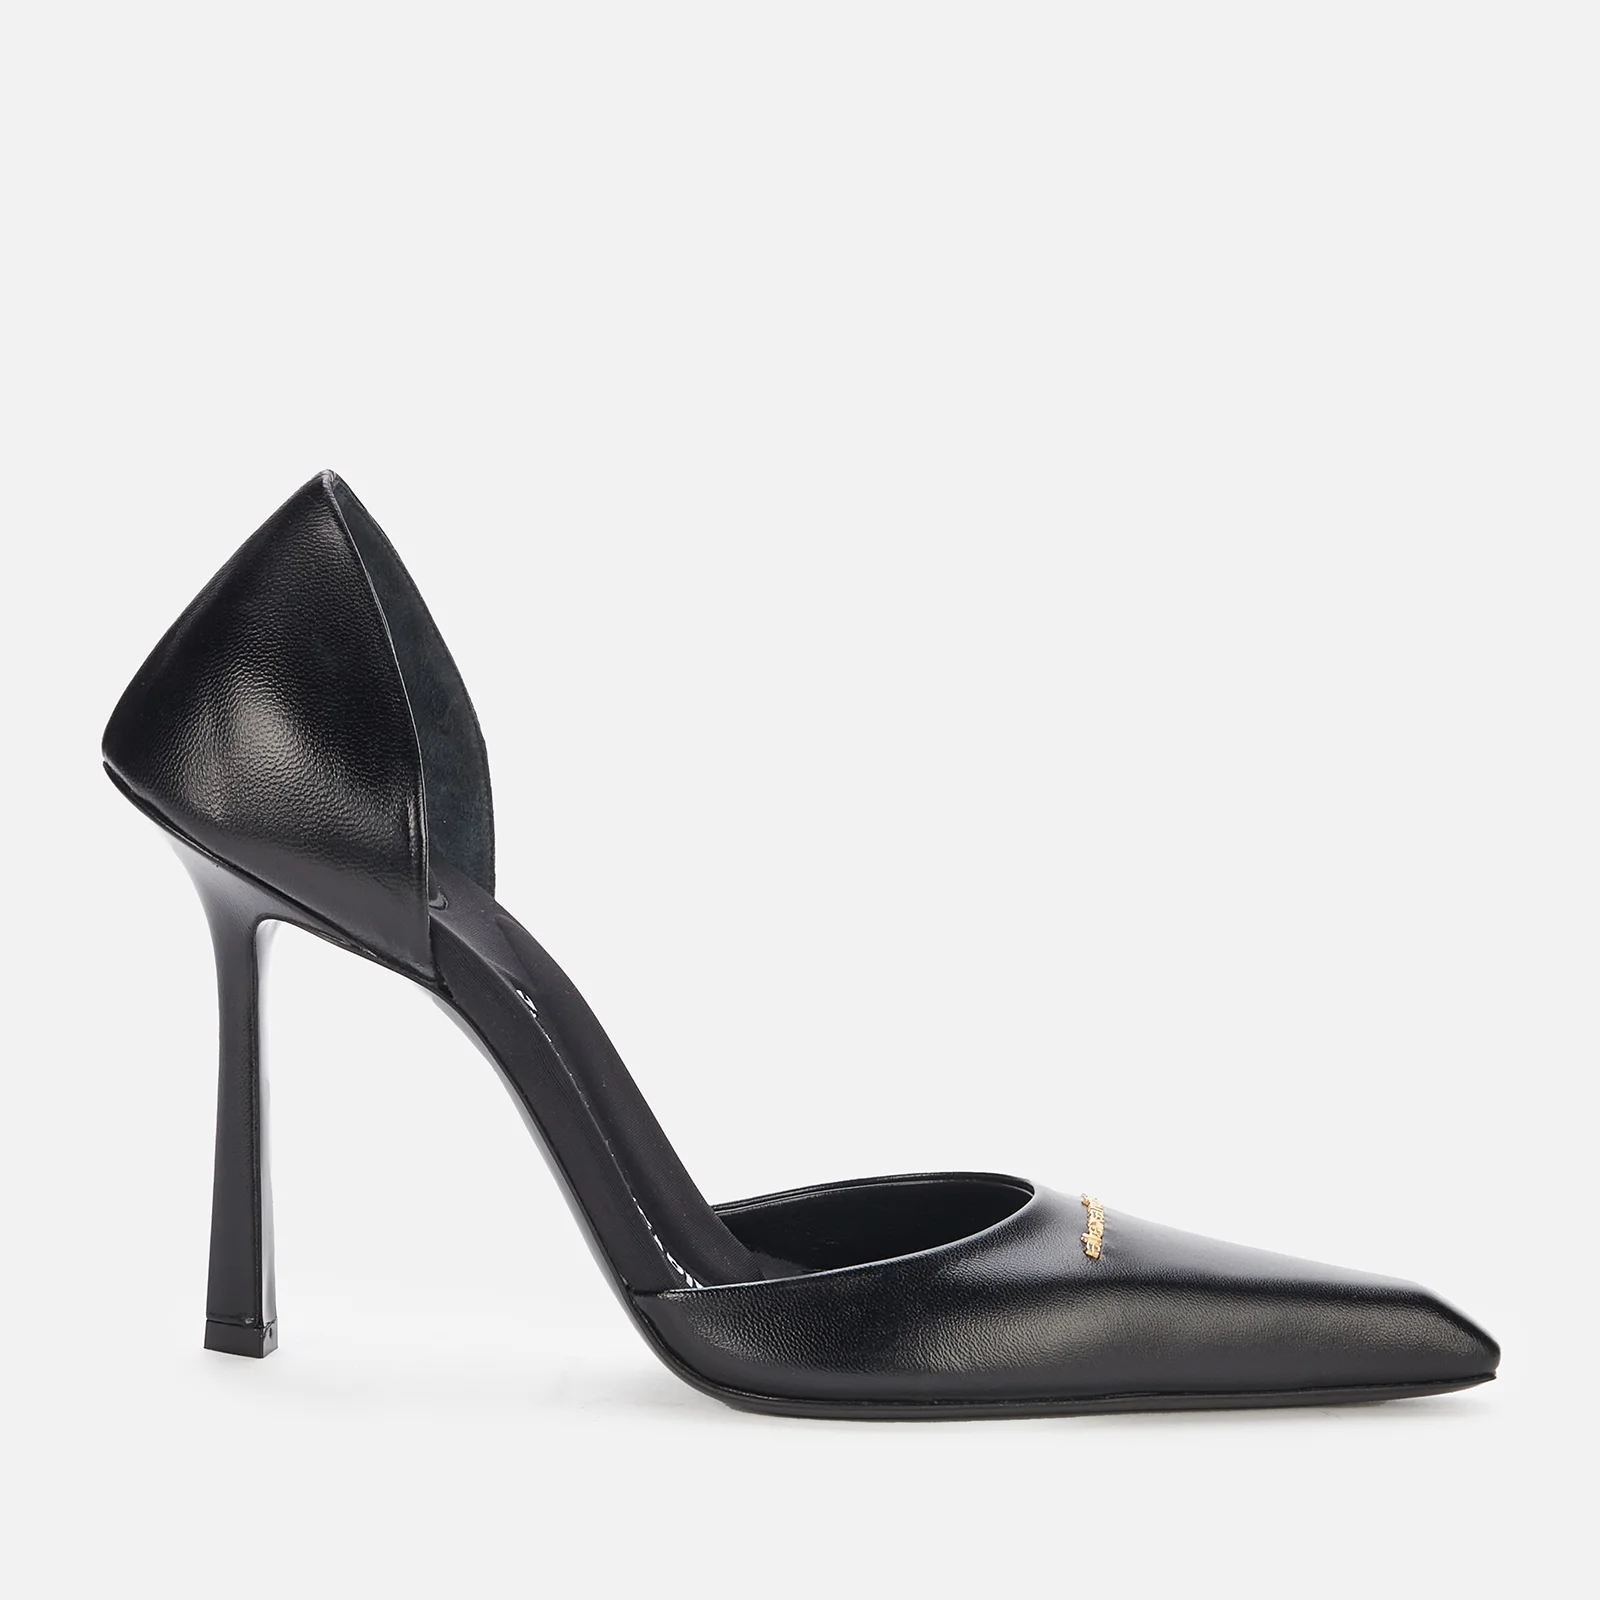 Alexander Wang Women's Viola Leather Court Shoes - Black Image 1